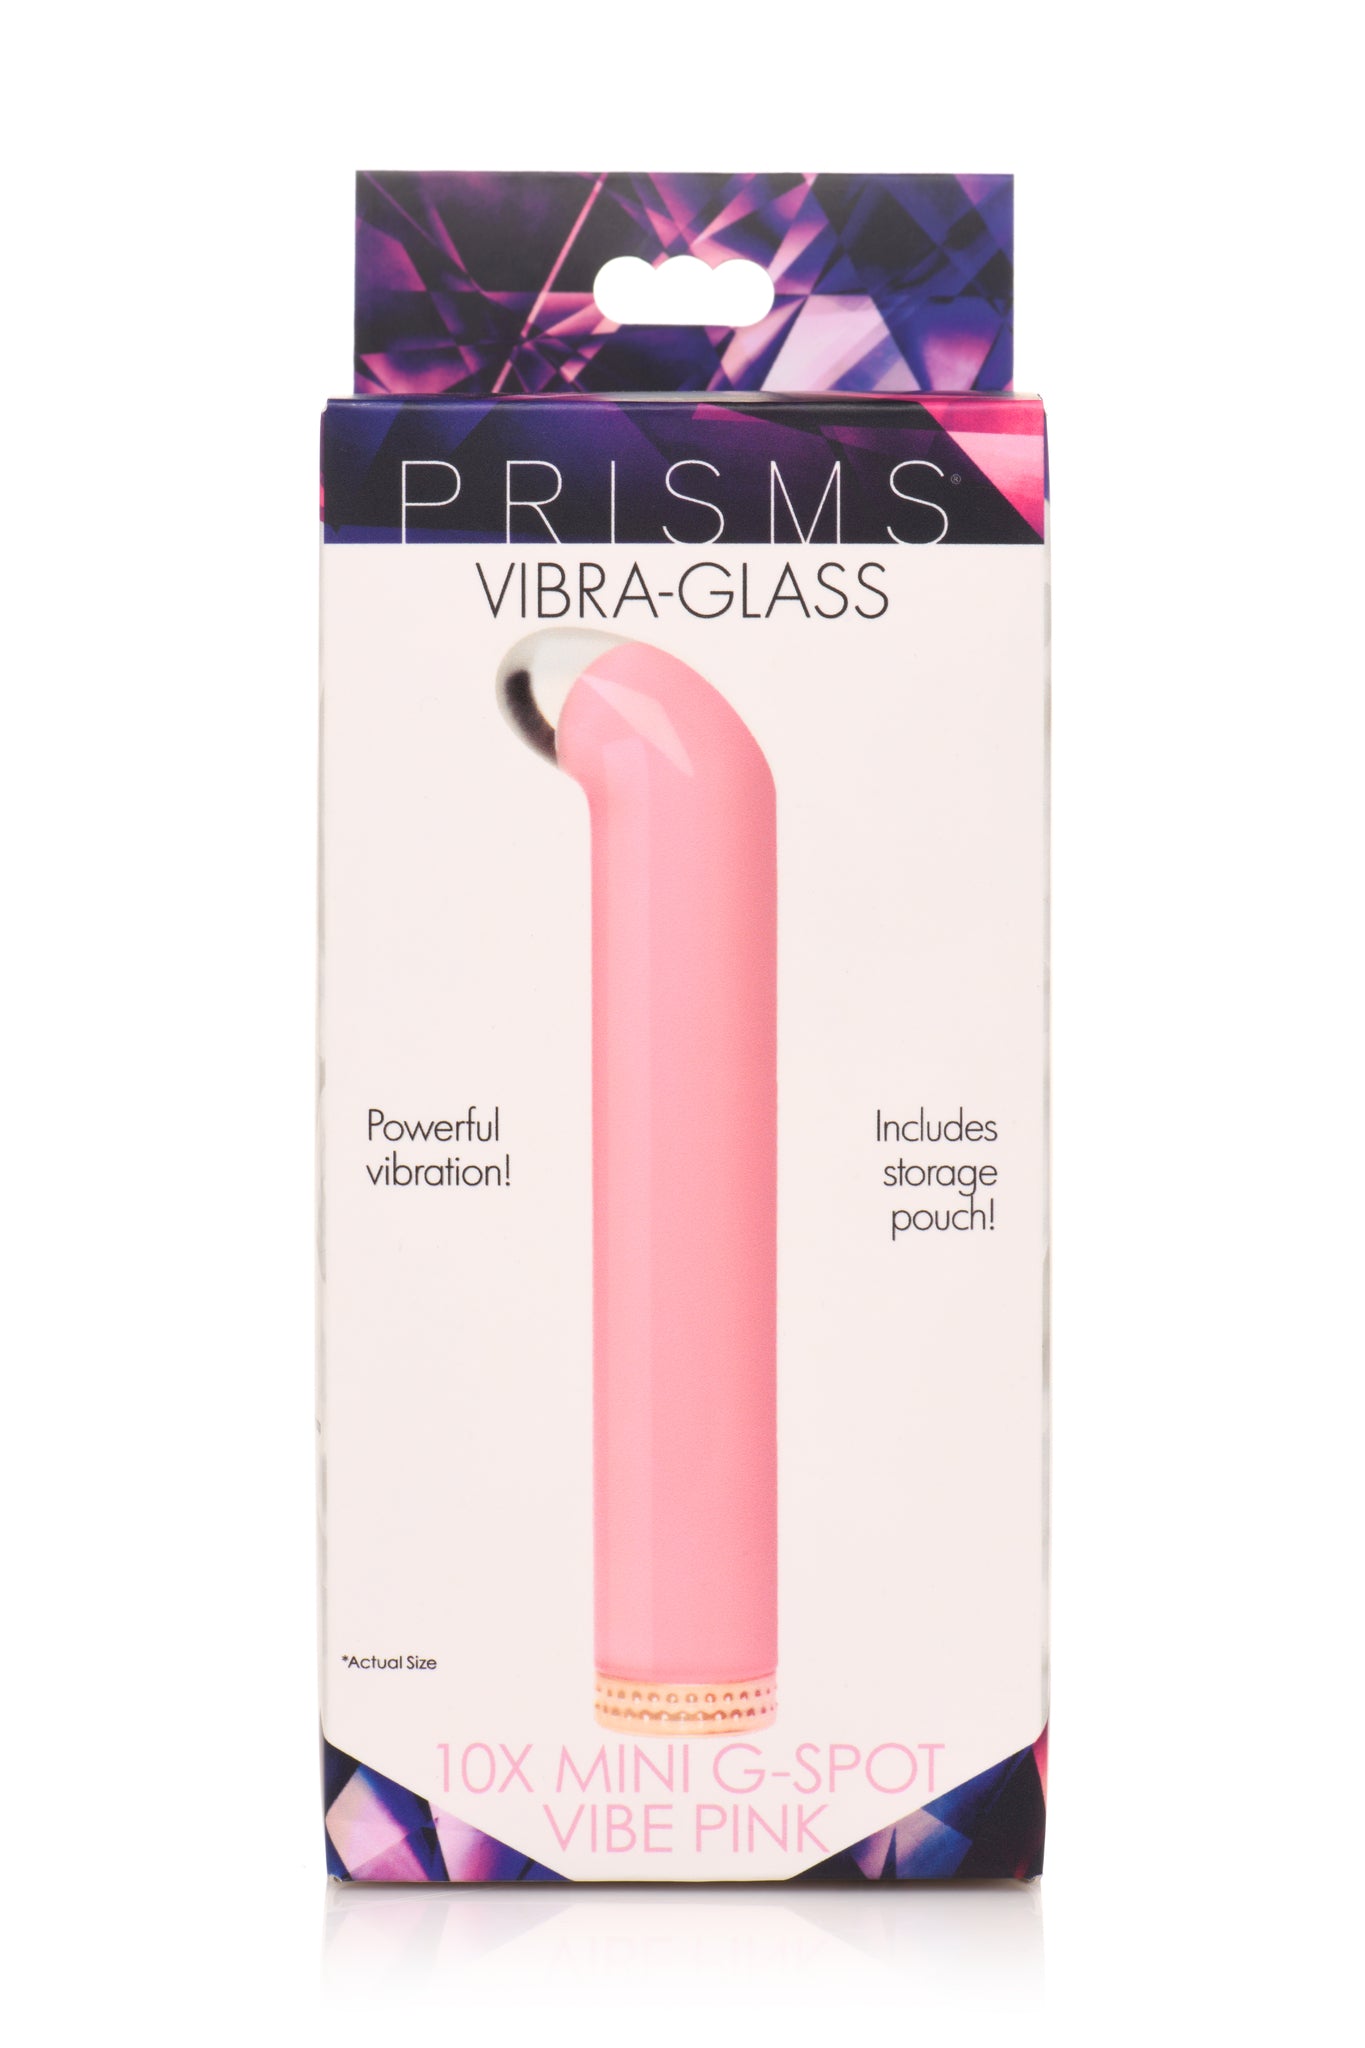 Prisms Vibra-glass 10x G-spot Vibe Pink